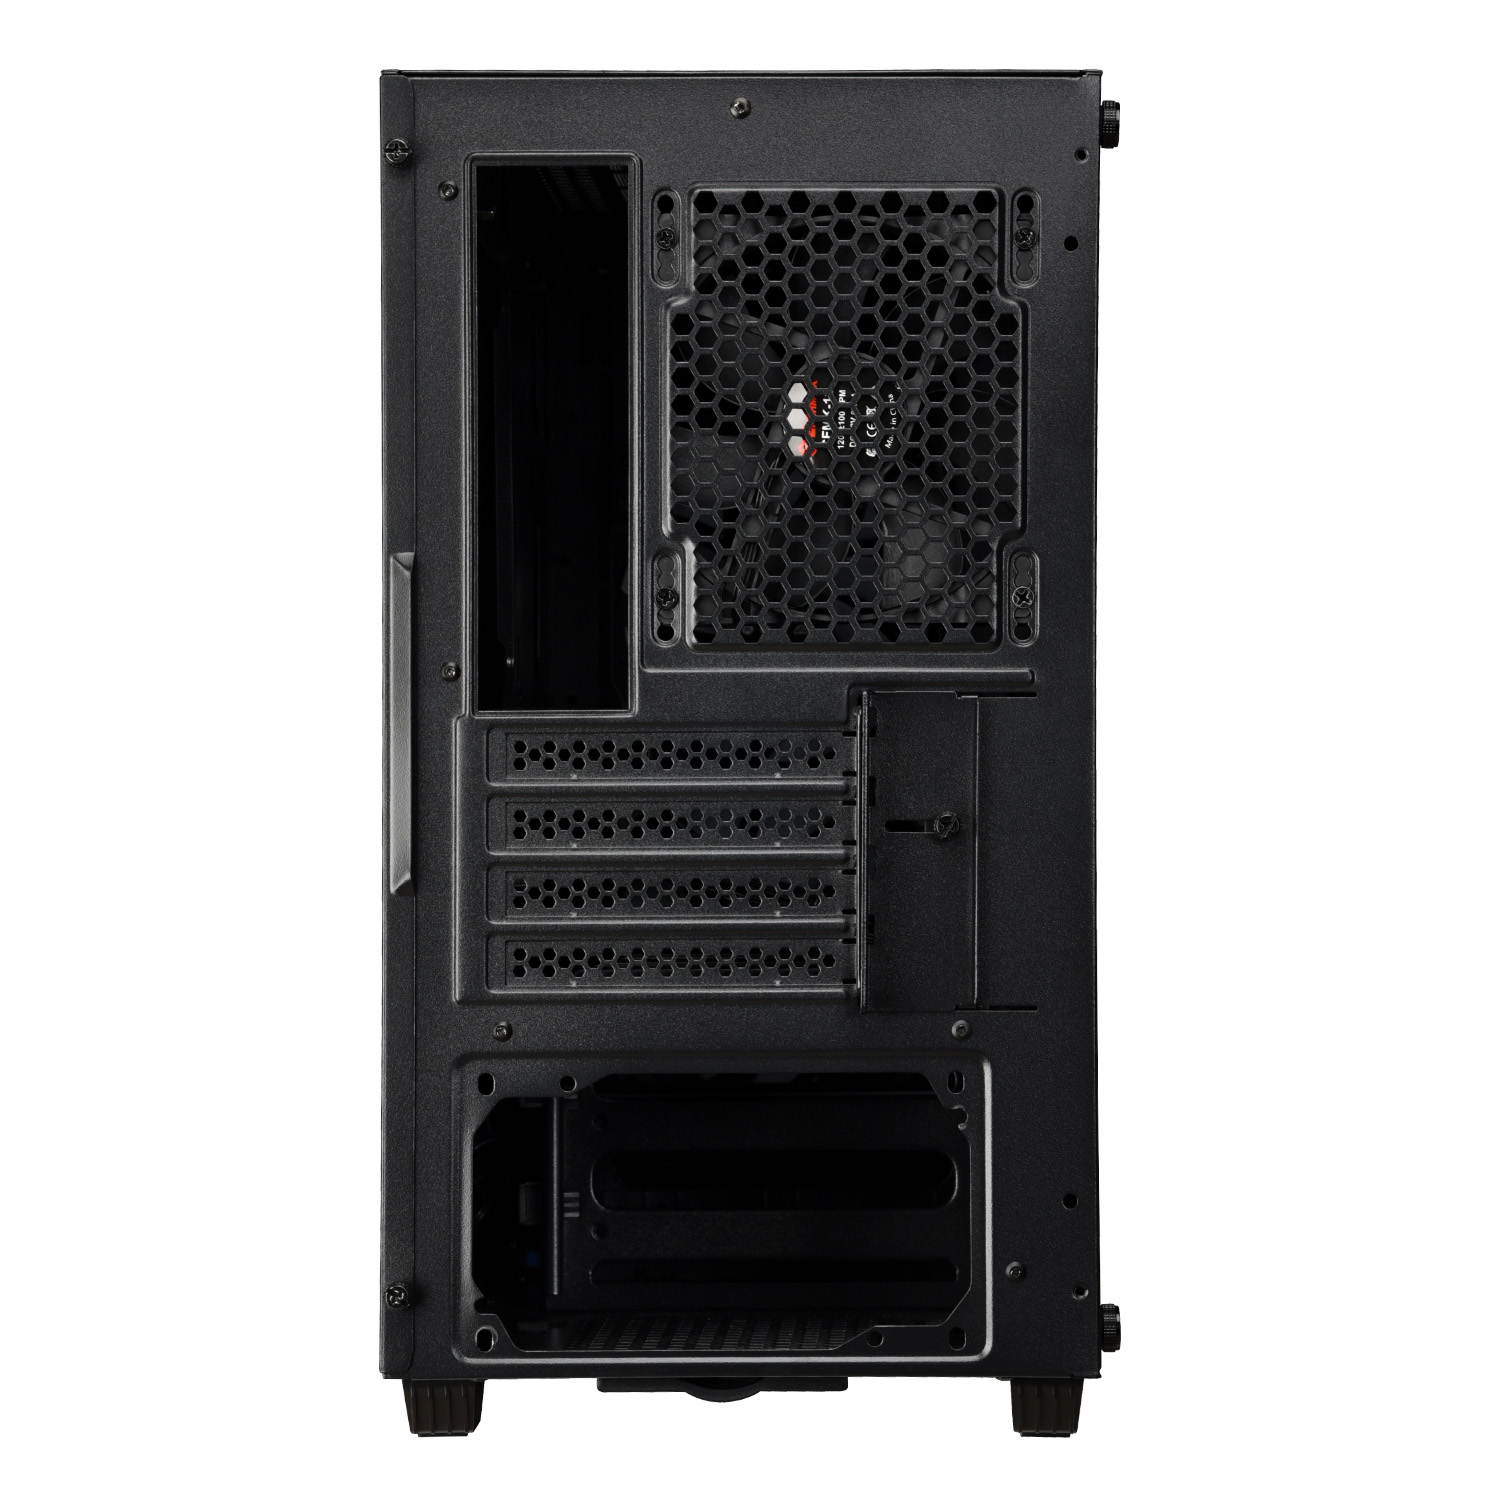 MS20-Marbleshell MS20 Mini-Tower Black/ White PC Case ENERMAX 